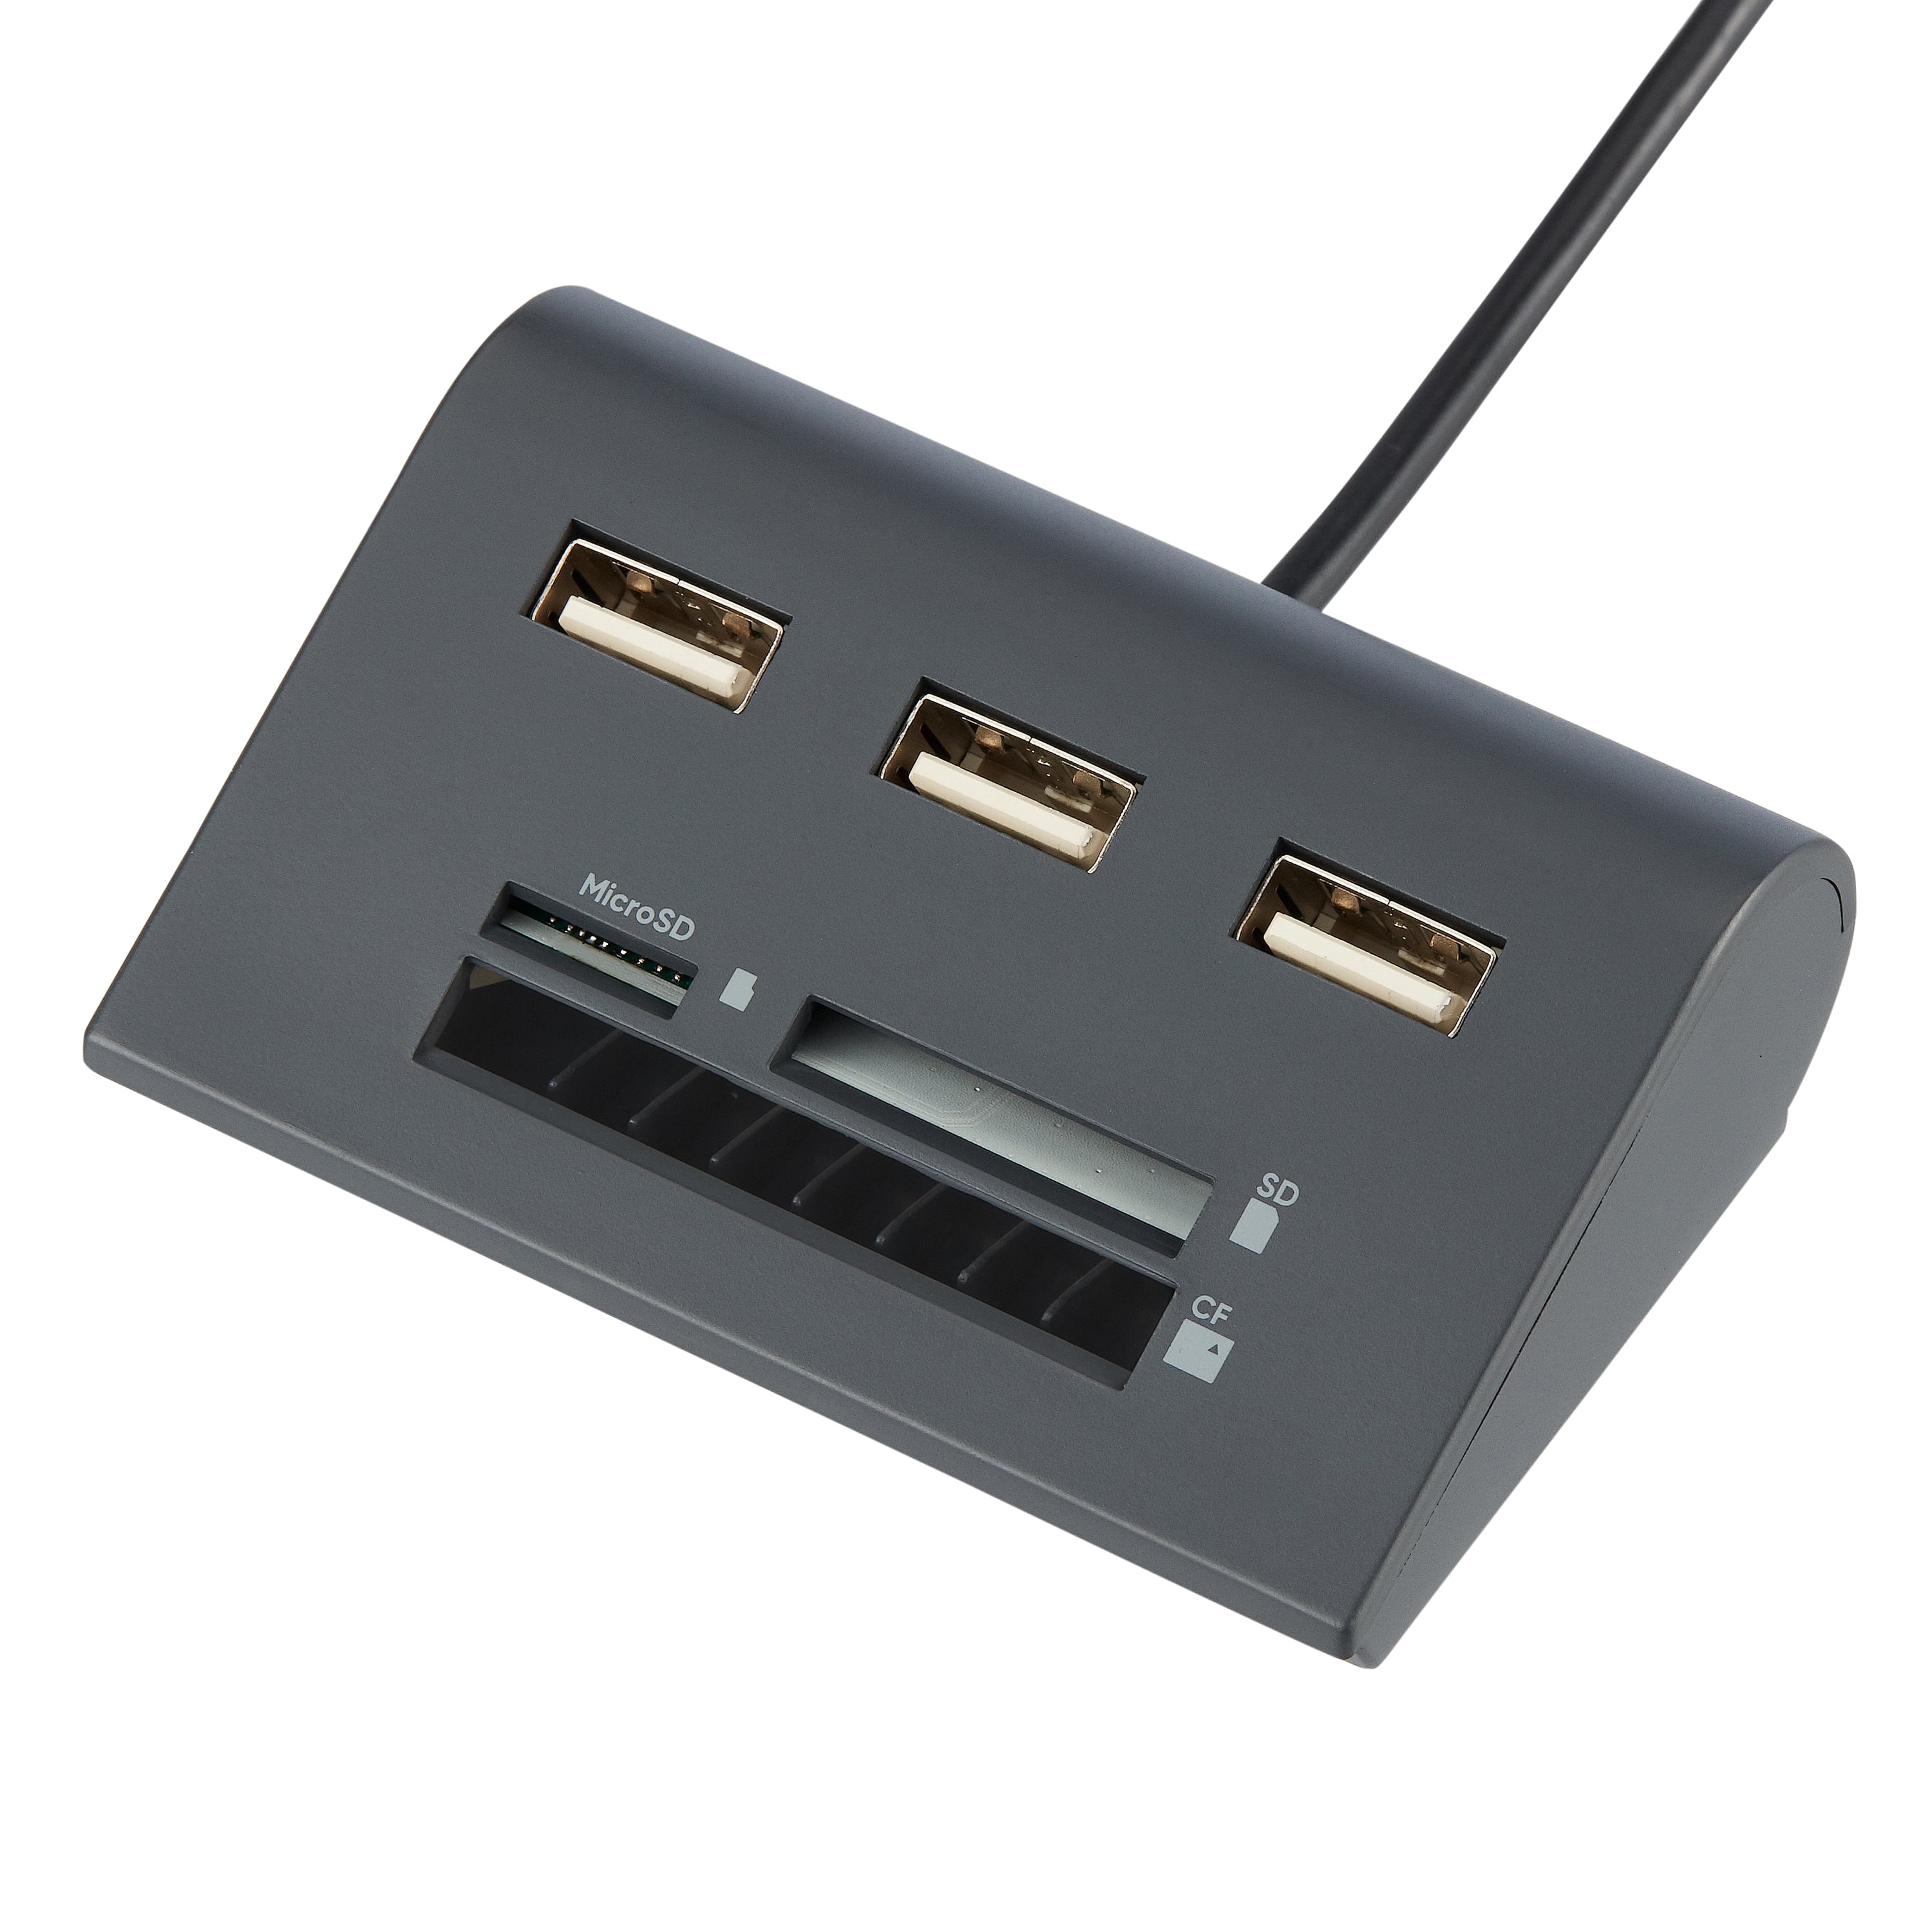 liefde provincie ruilen onn. Multi-Port USB Hub with SD, Micro SD and Compact Flash Card Reader -  Walmart.com